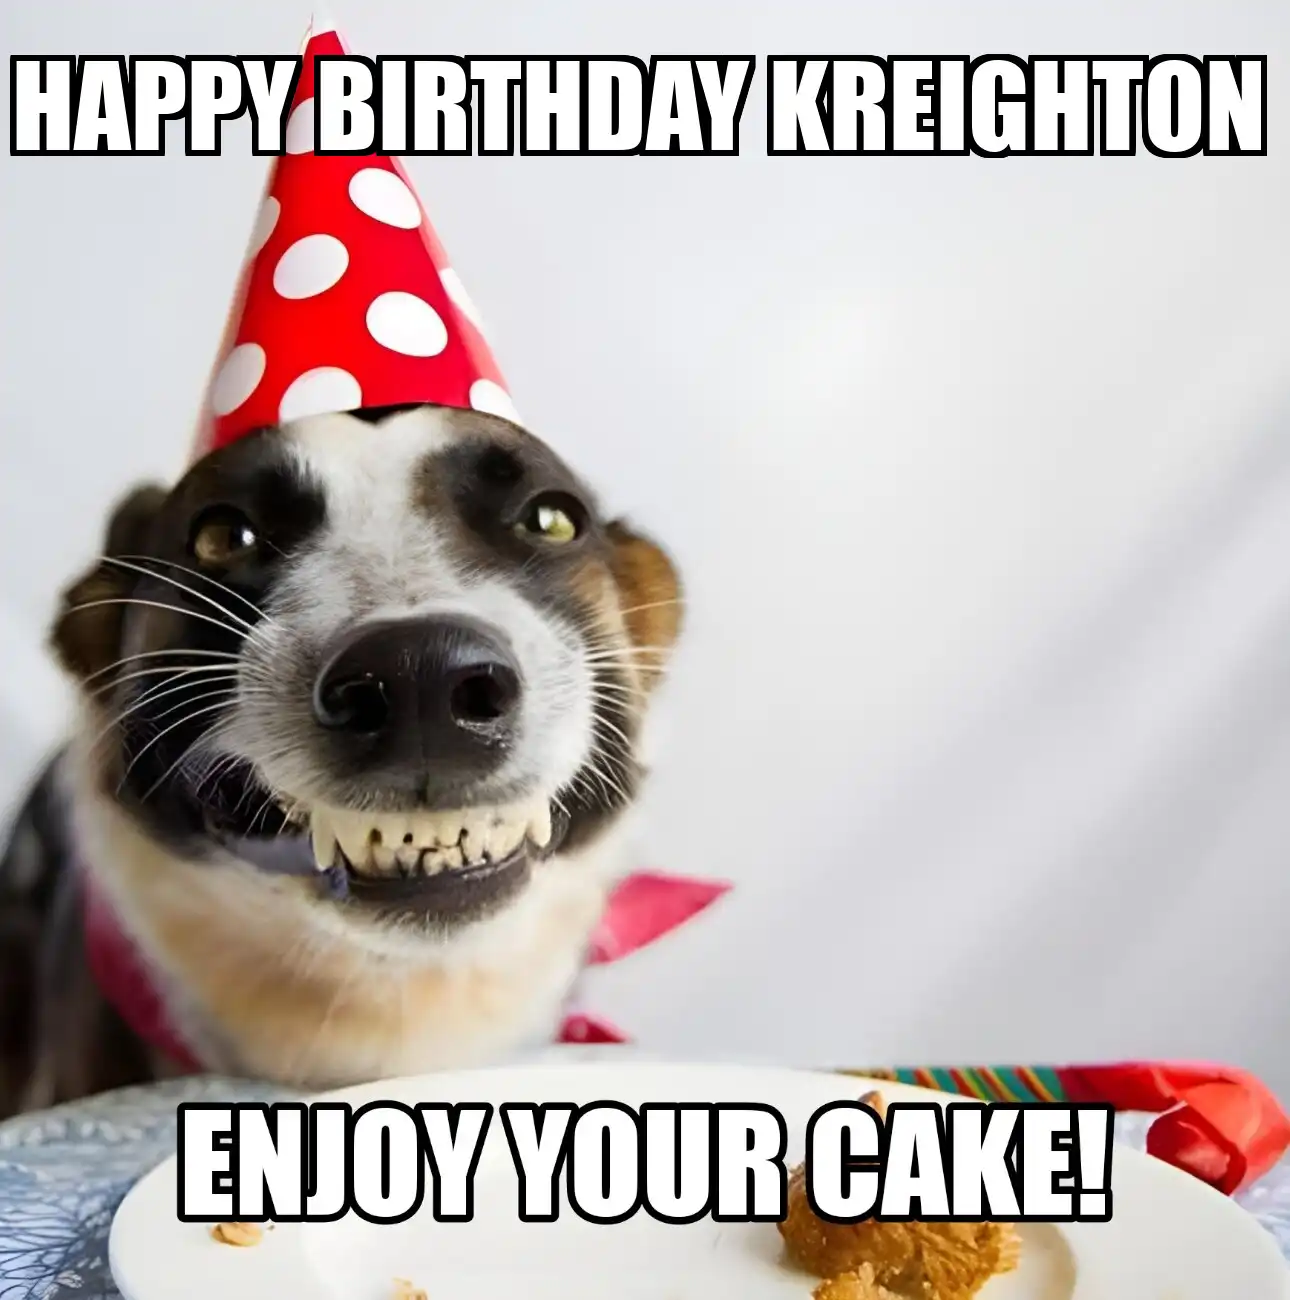 Happy Birthday Kreighton Enjoy Your Cake Dog Meme